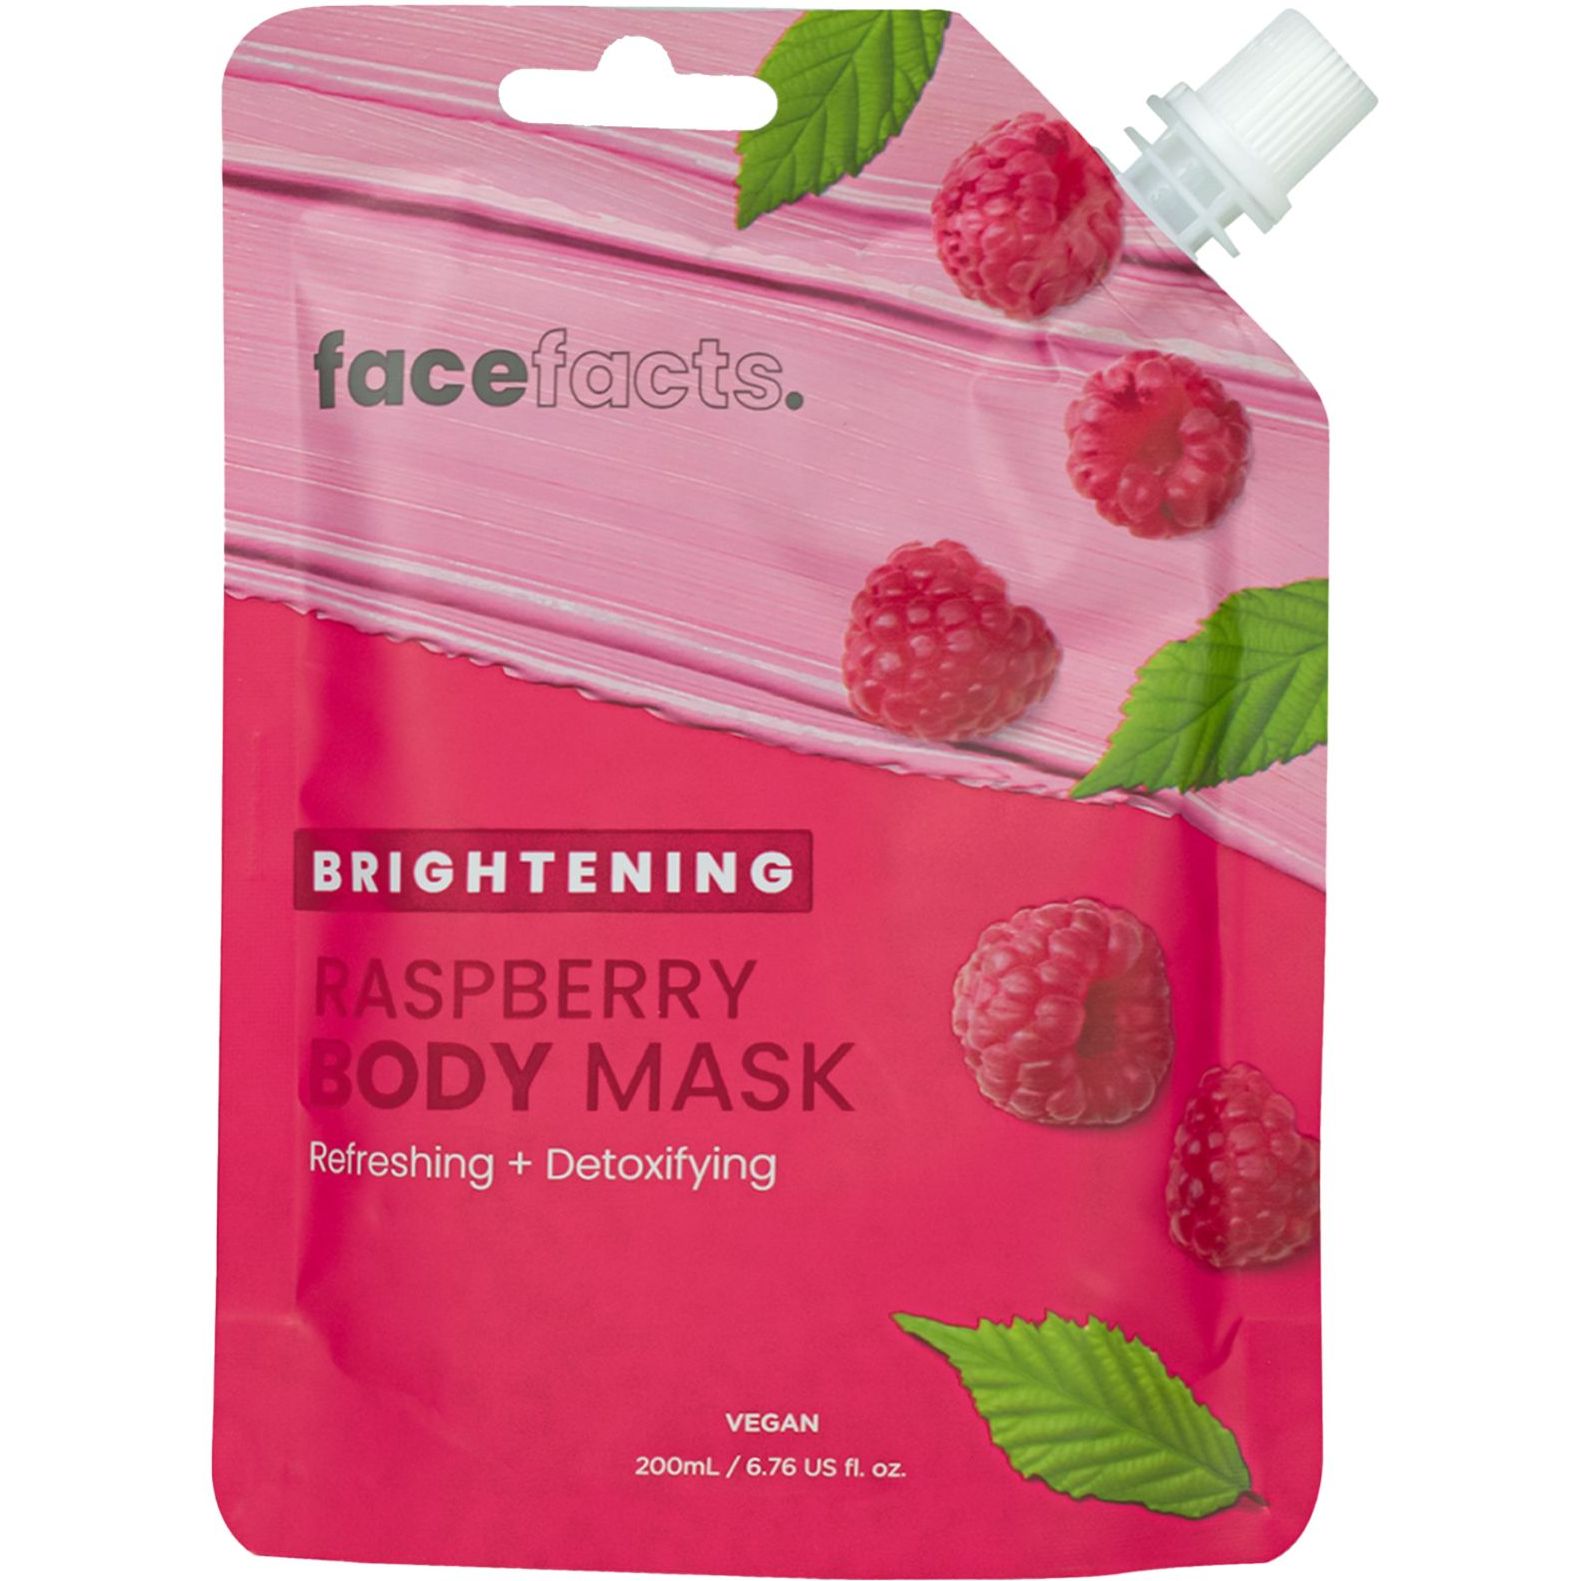 Освітлююча грязьова маска для тіла Face Facts Brightening Raspberry Body Mask 200 мл - фото 1